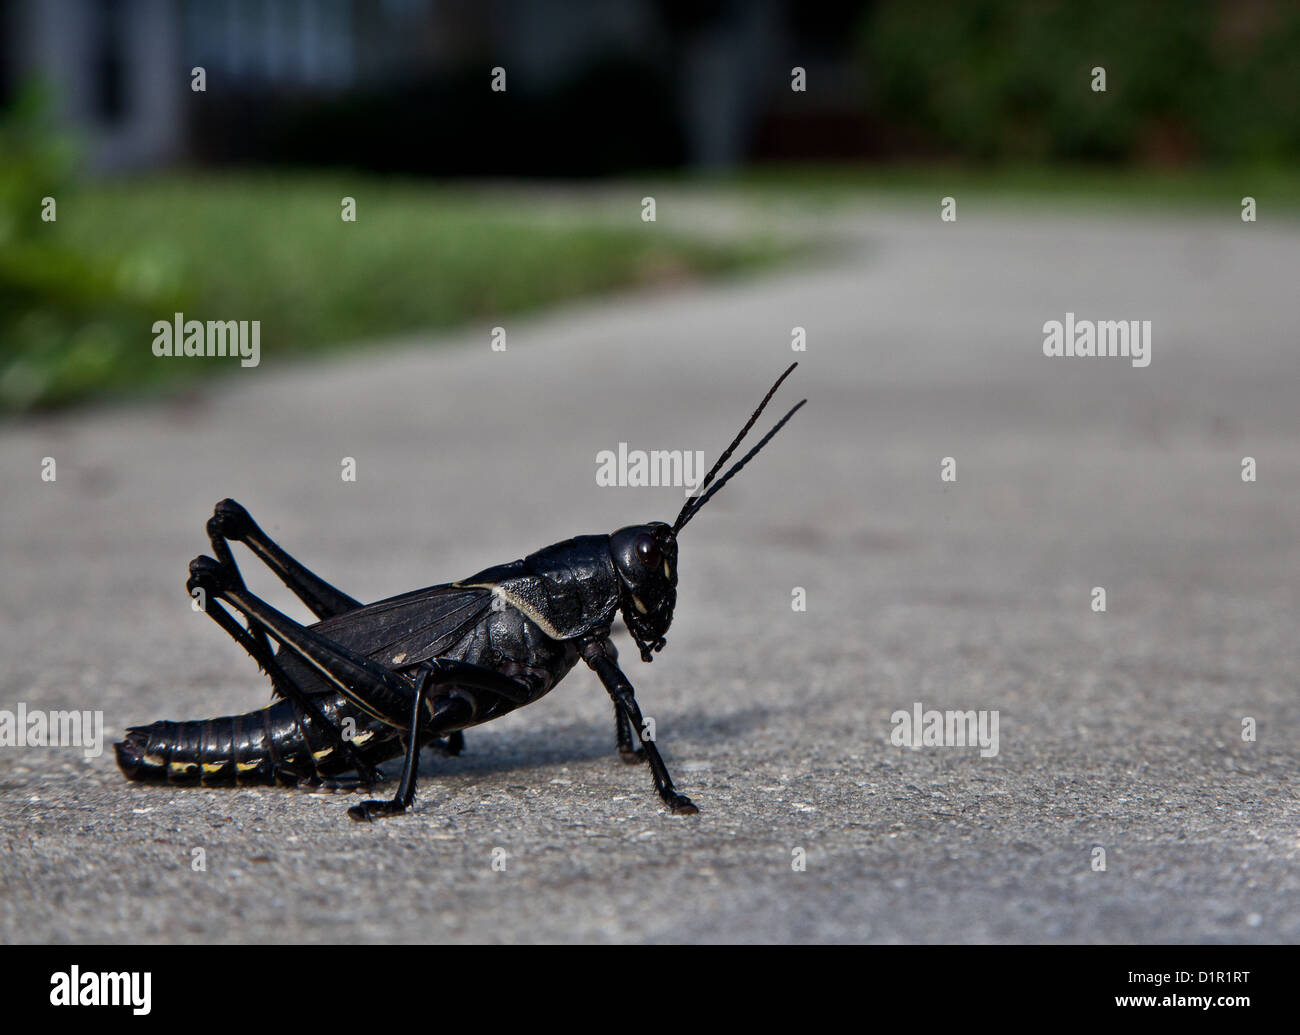 Southeastern Lubber Grasshopper (Romalea guttata), rural Louisiana, USA  Stock Photo - Alamy